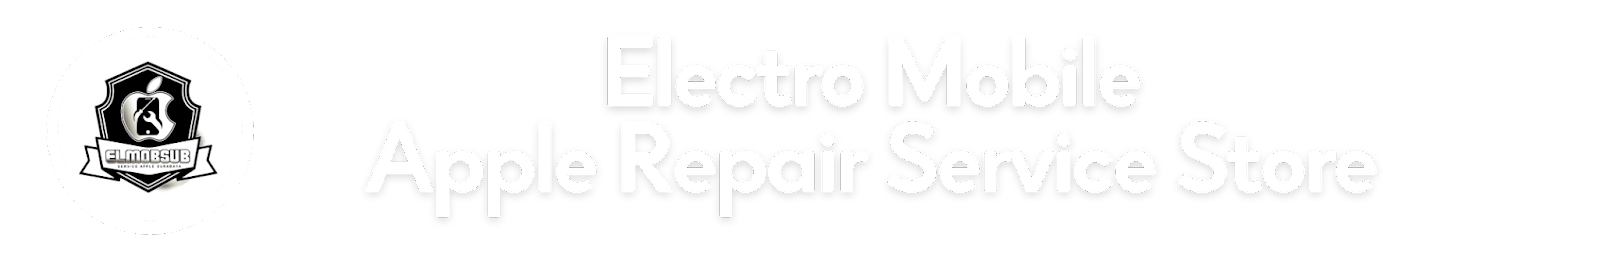 Electro Mobile Apple Repair Service Store Surabaya (iPhone, MacBook, iPad, iMac, & iWatch)